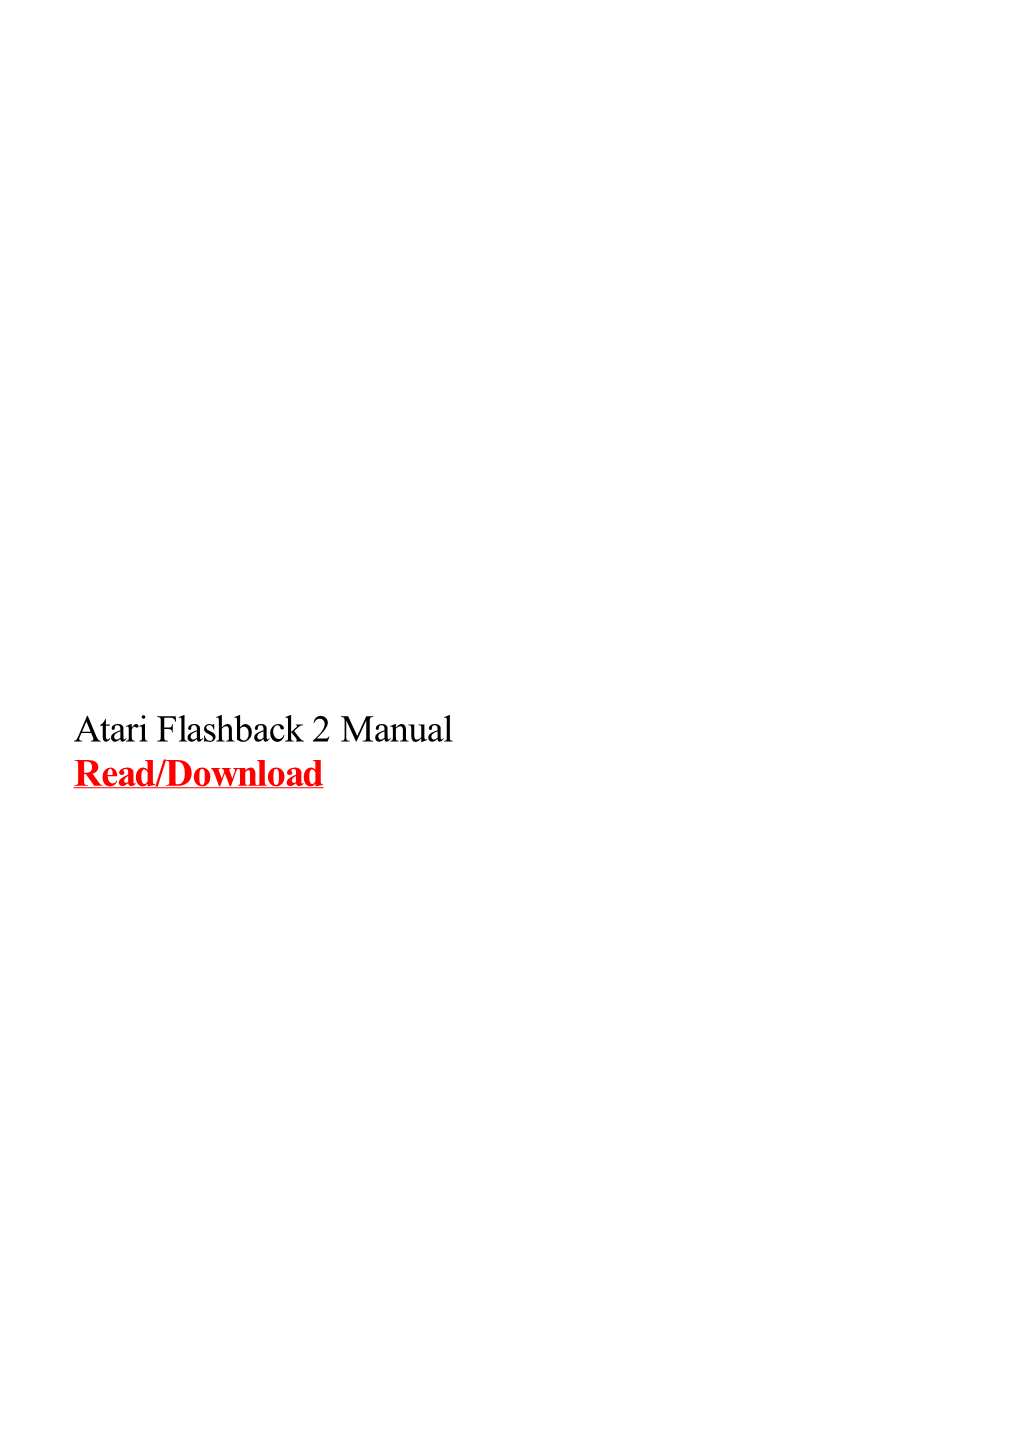 Atari Flashback 2 Manual.Pdf